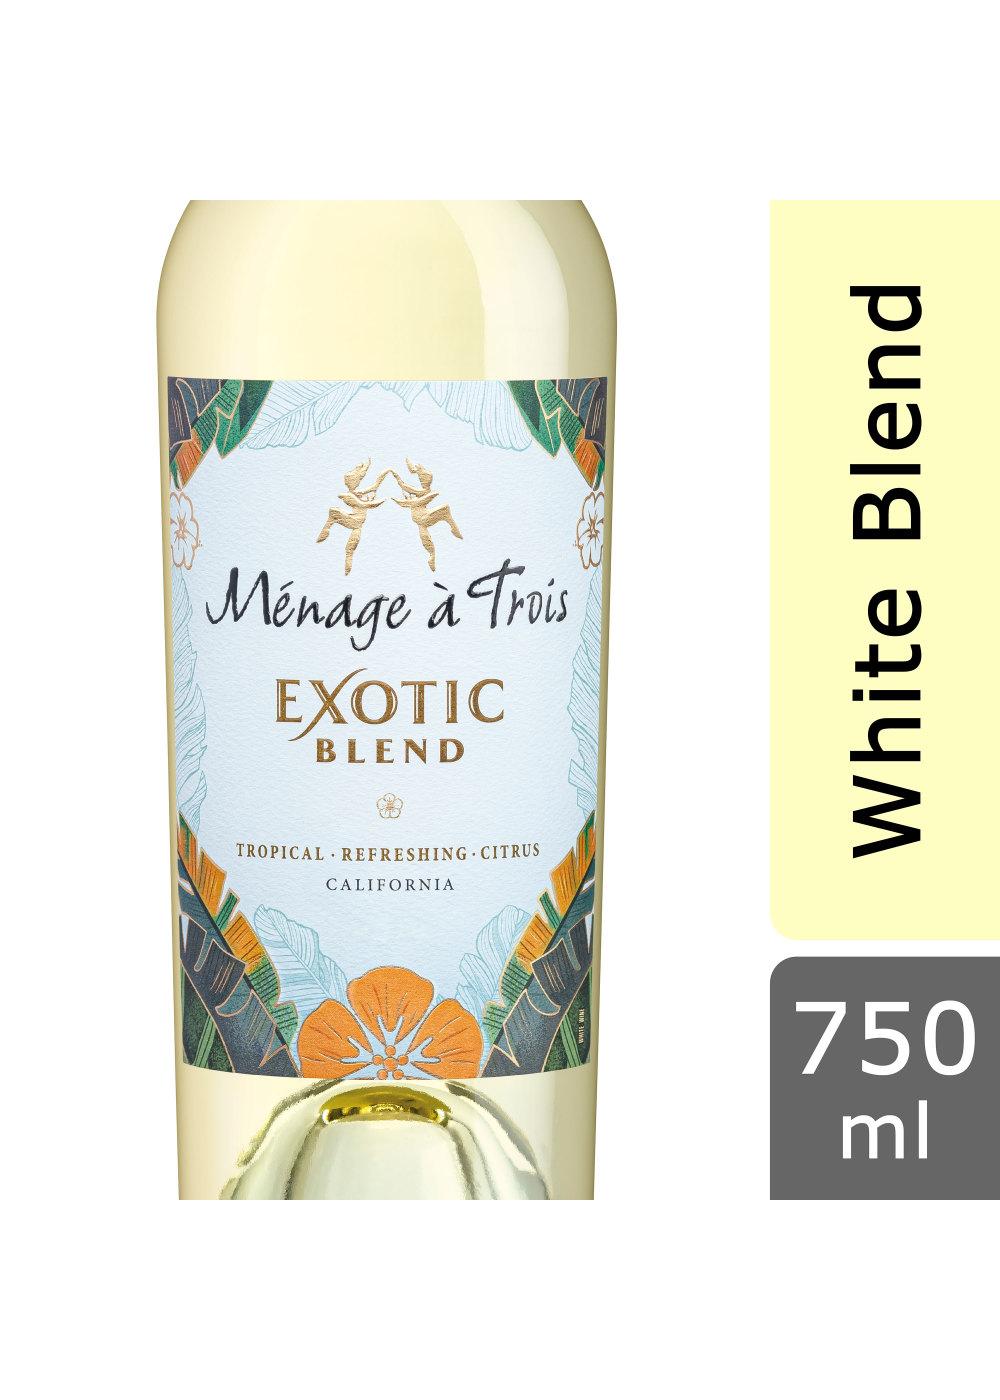 Ménage à Trois Exotic White Wine Blend; image 3 of 4